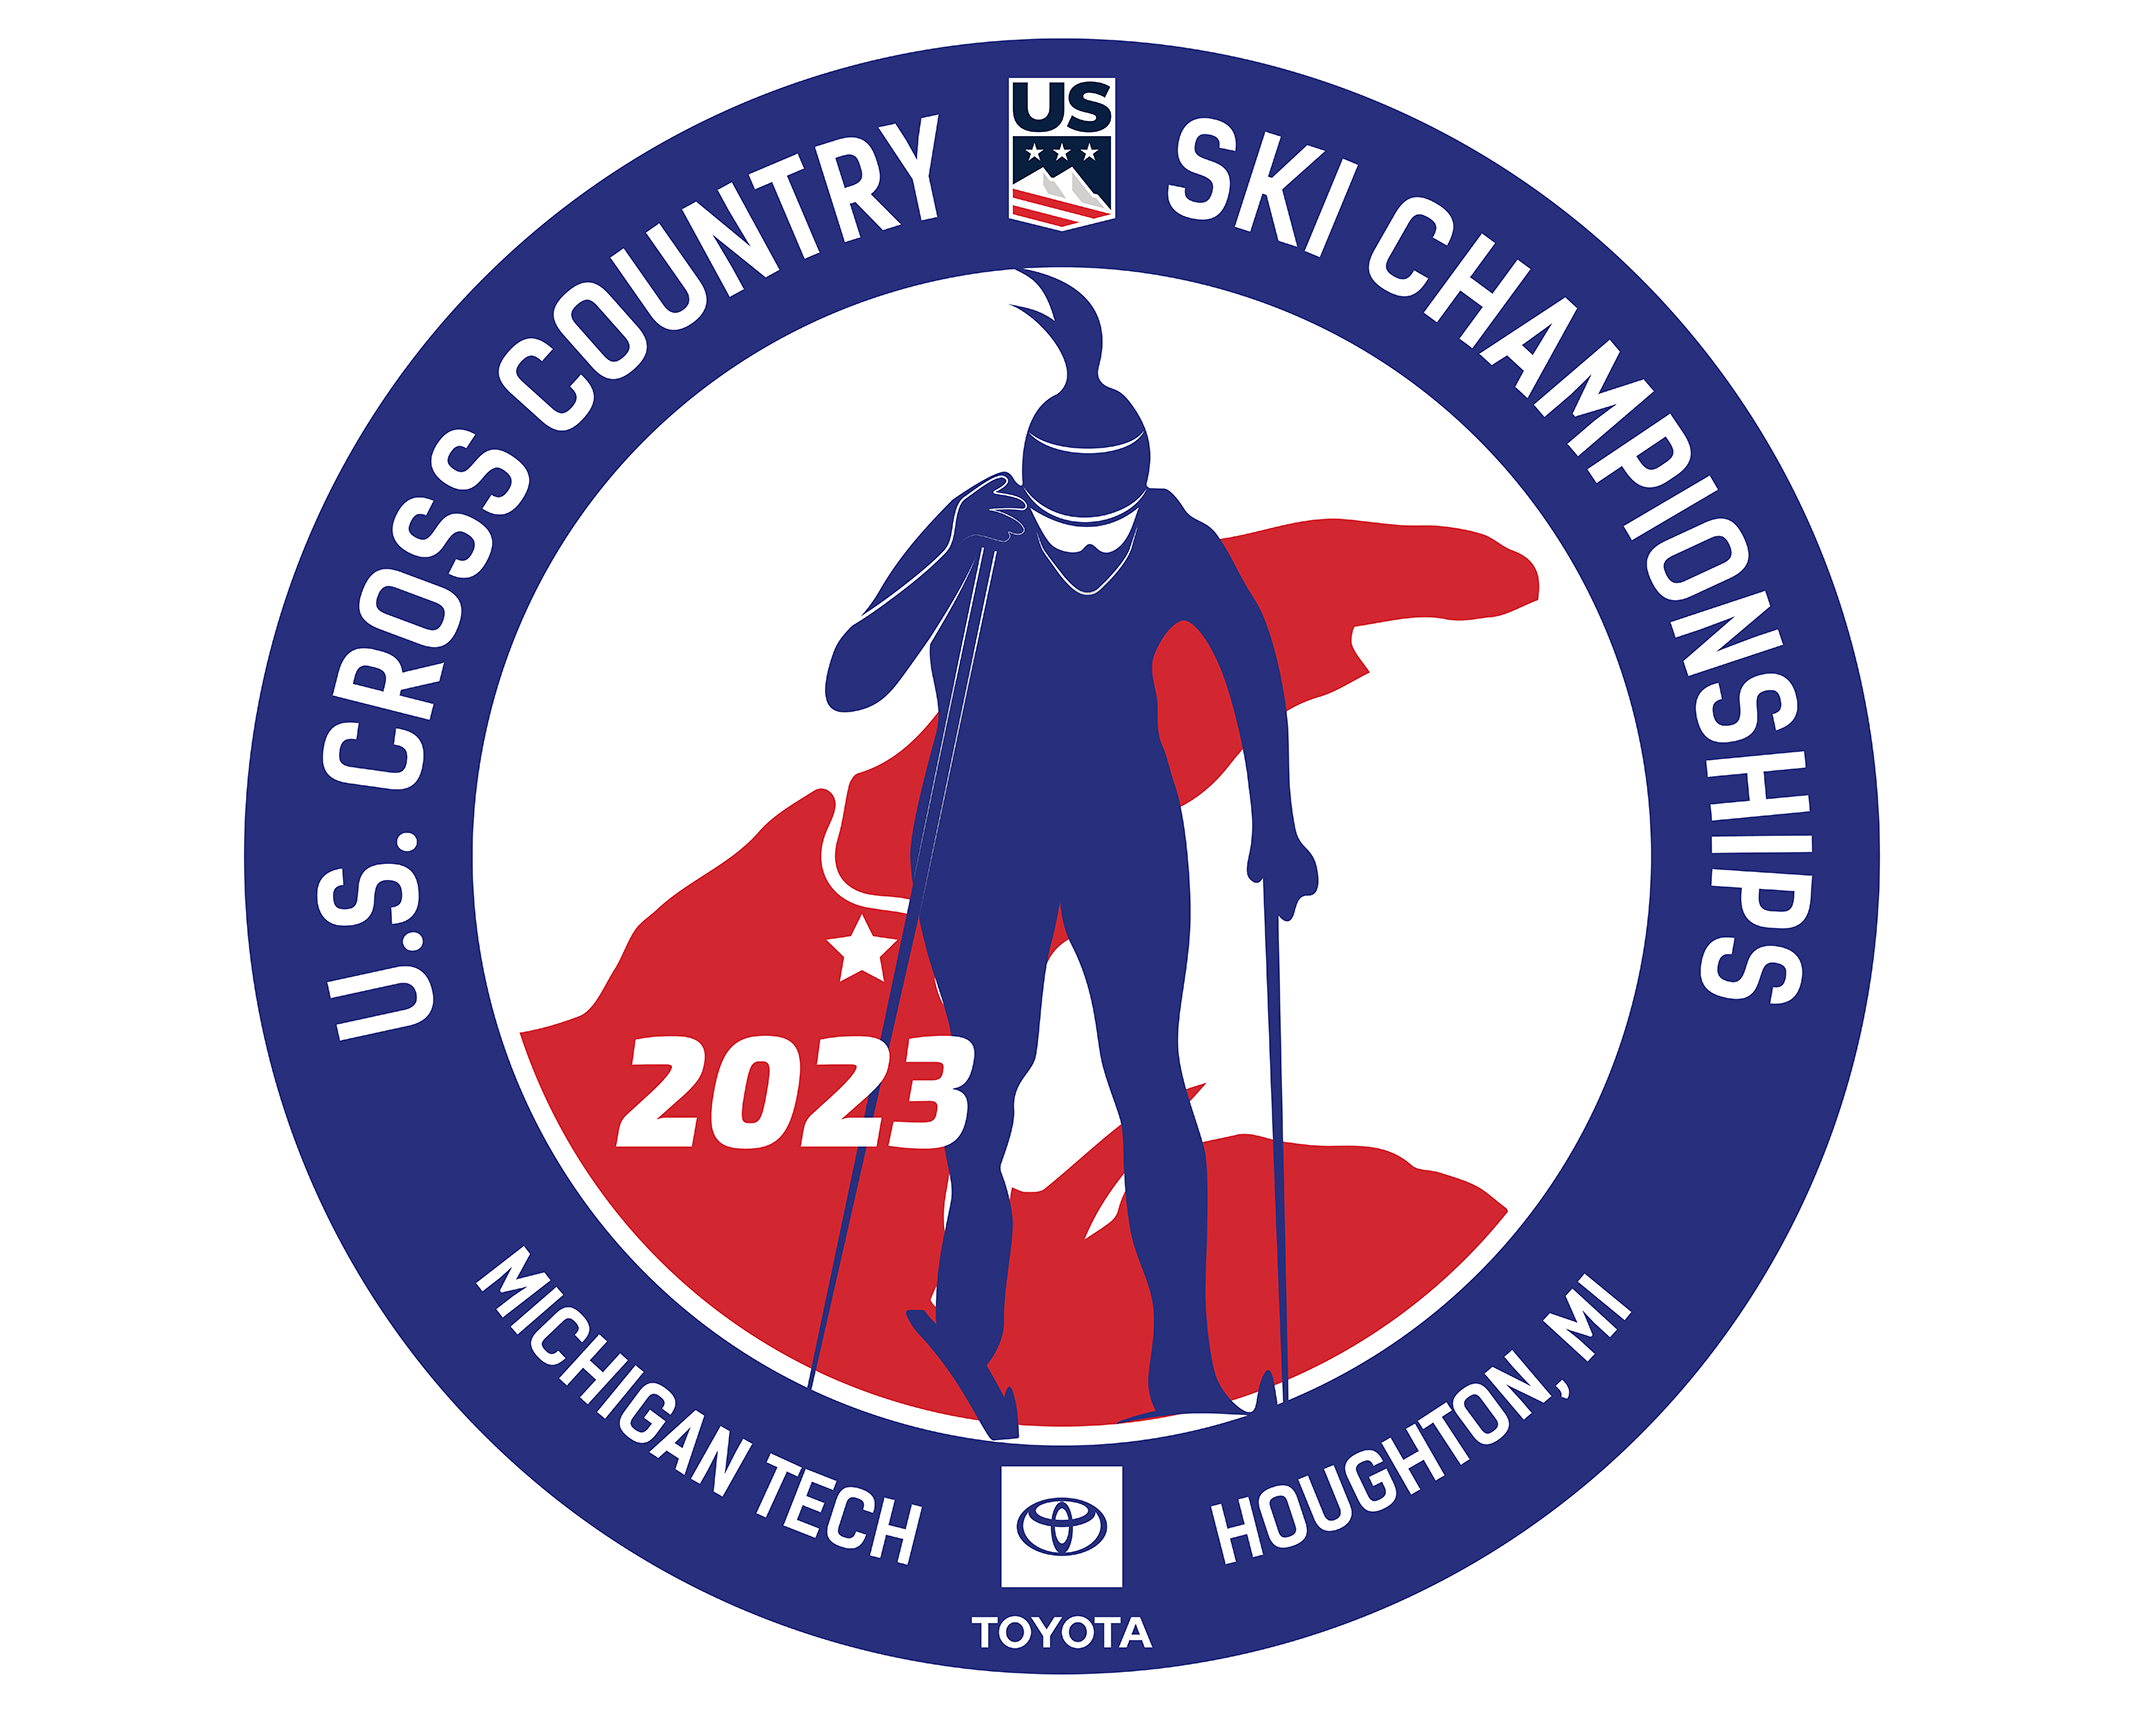 US championships logo